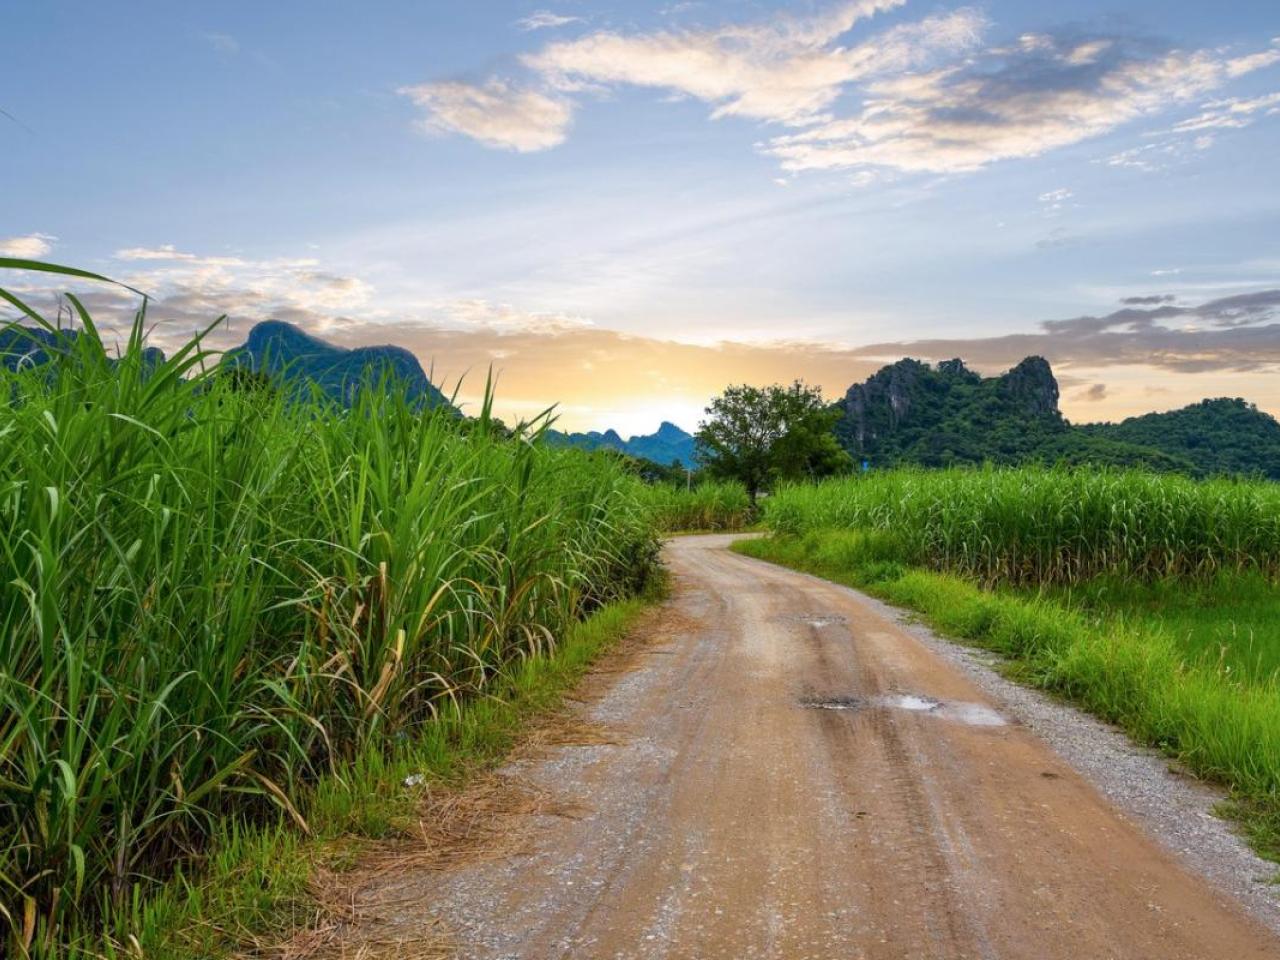 Pathway leading through sugarcane fields